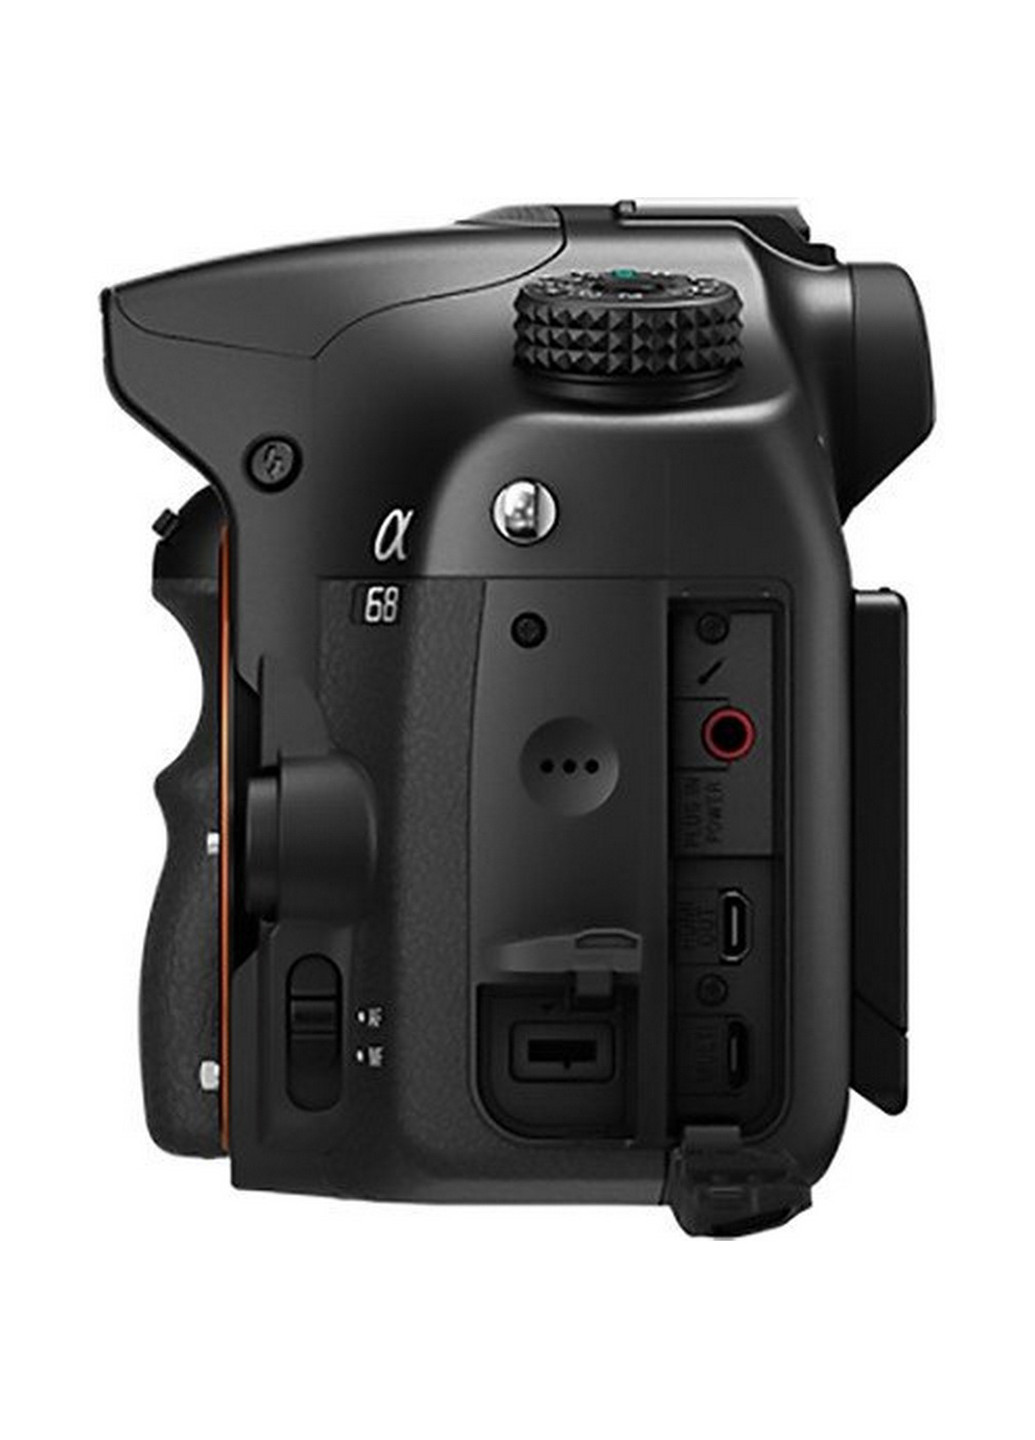 Дзеркальна фотокамера Alpha A68 kit 18-55mm Sony Alpha A68 kit 18-55mm Black чорна